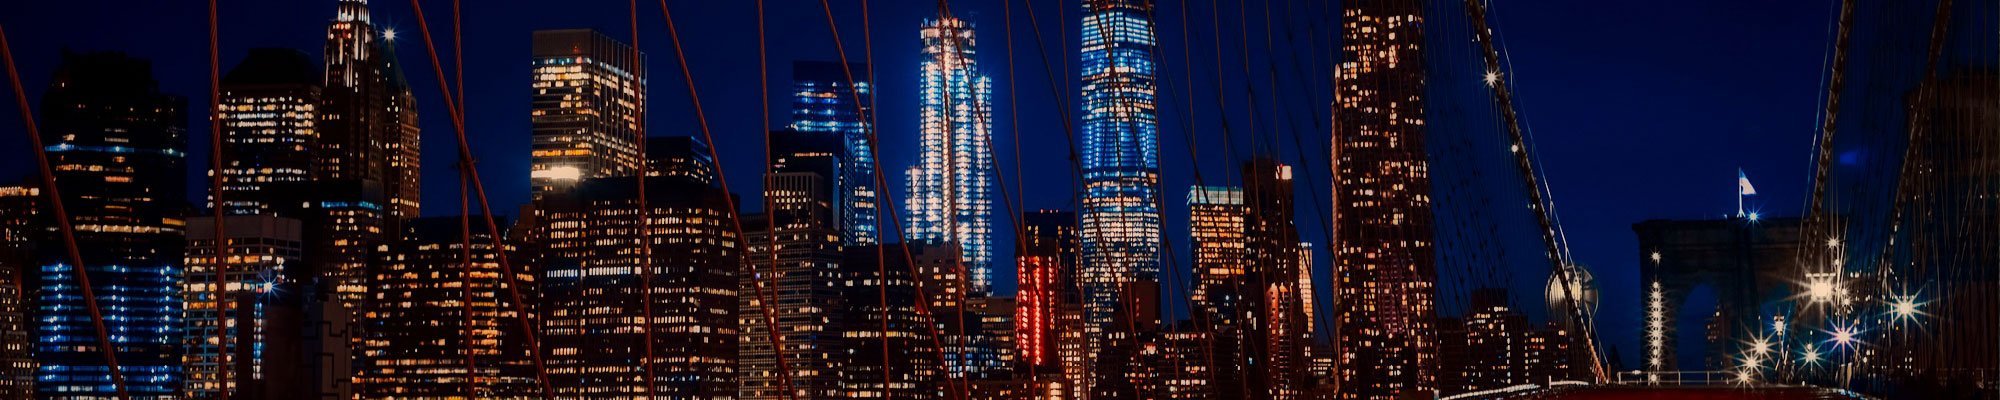 New York City buildings at night